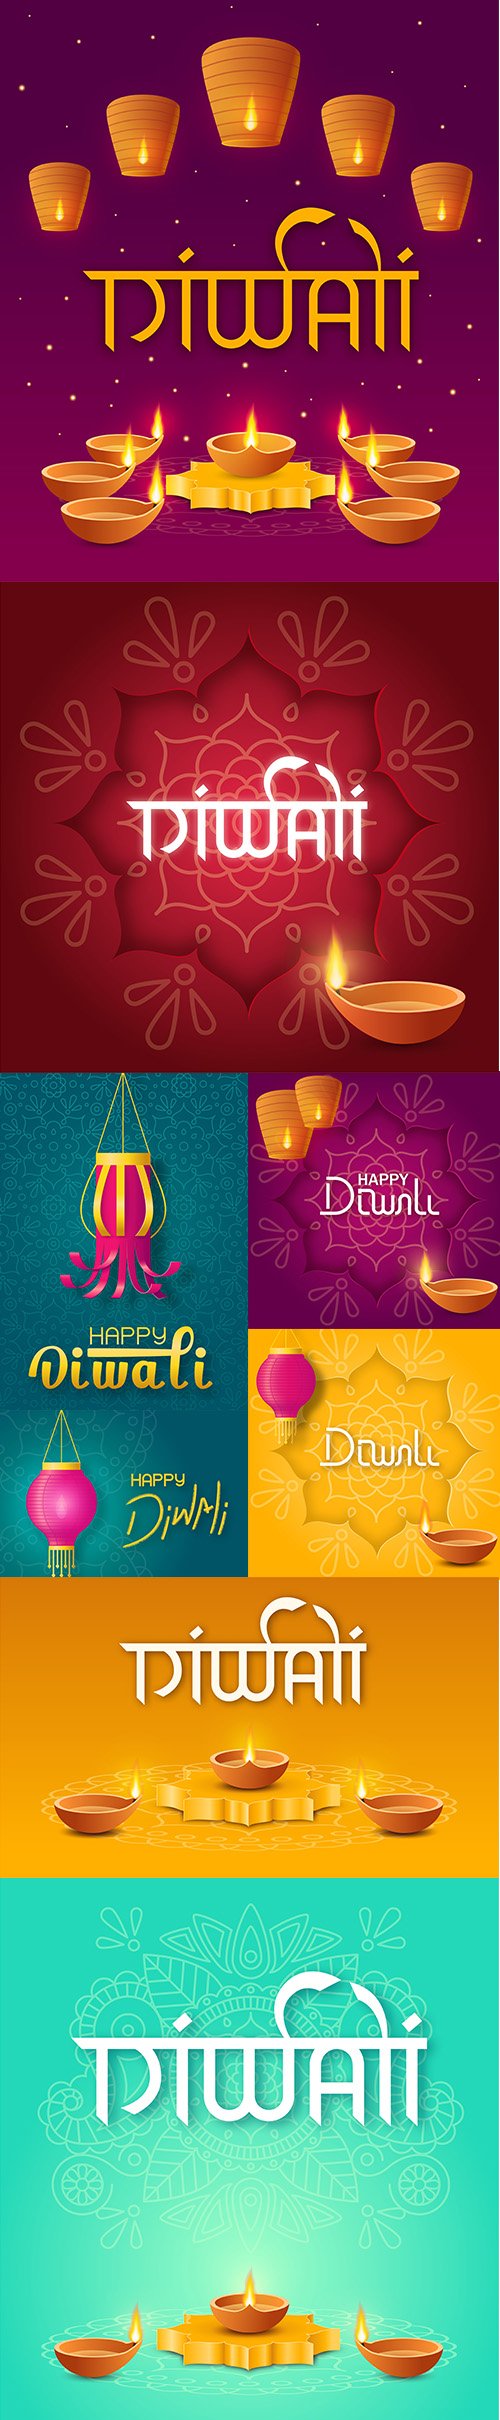 Concept festive diwali illustrations